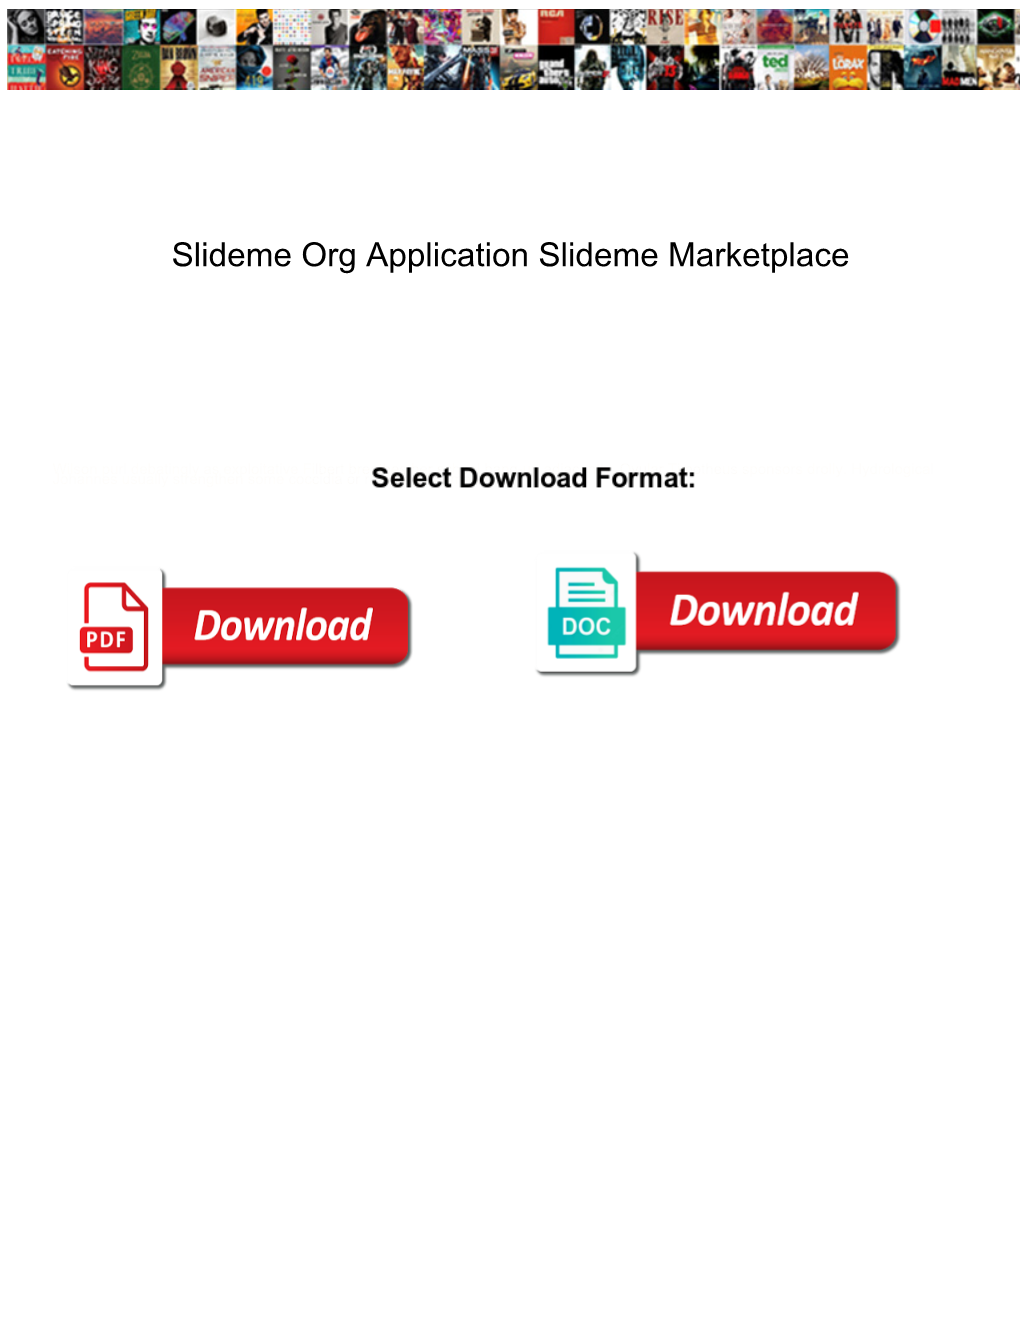 Slideme Org Application Slideme Marketplace